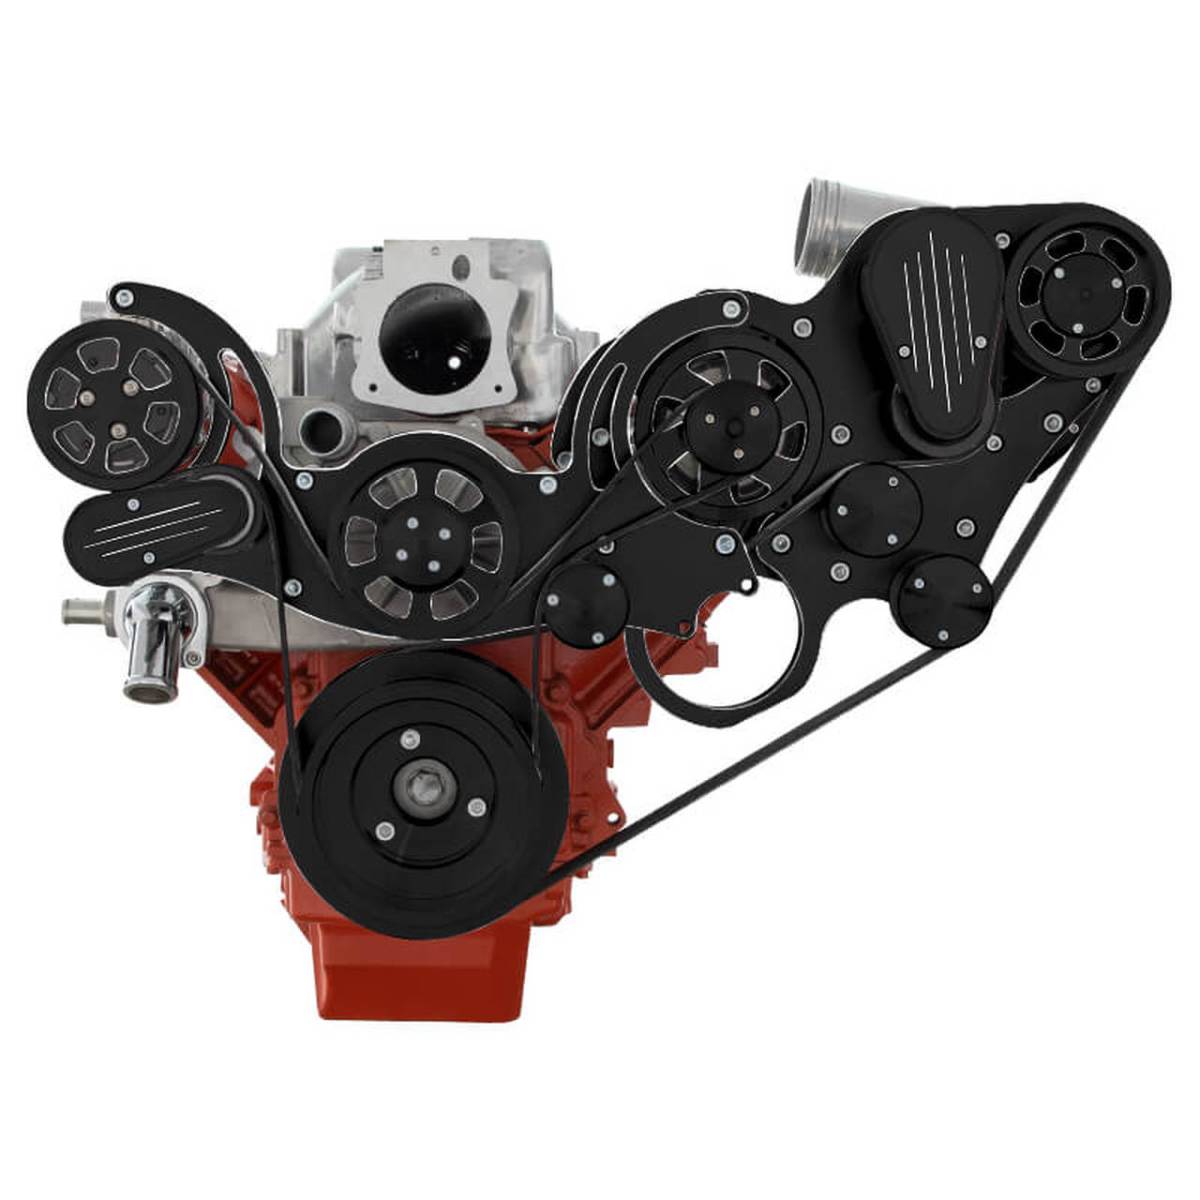 CVF Racing - CVF Wraptor Chevy LS Engine Procharger Serpentine Bracket System with AC & Alternator - Black Diamond Finish - Image 1